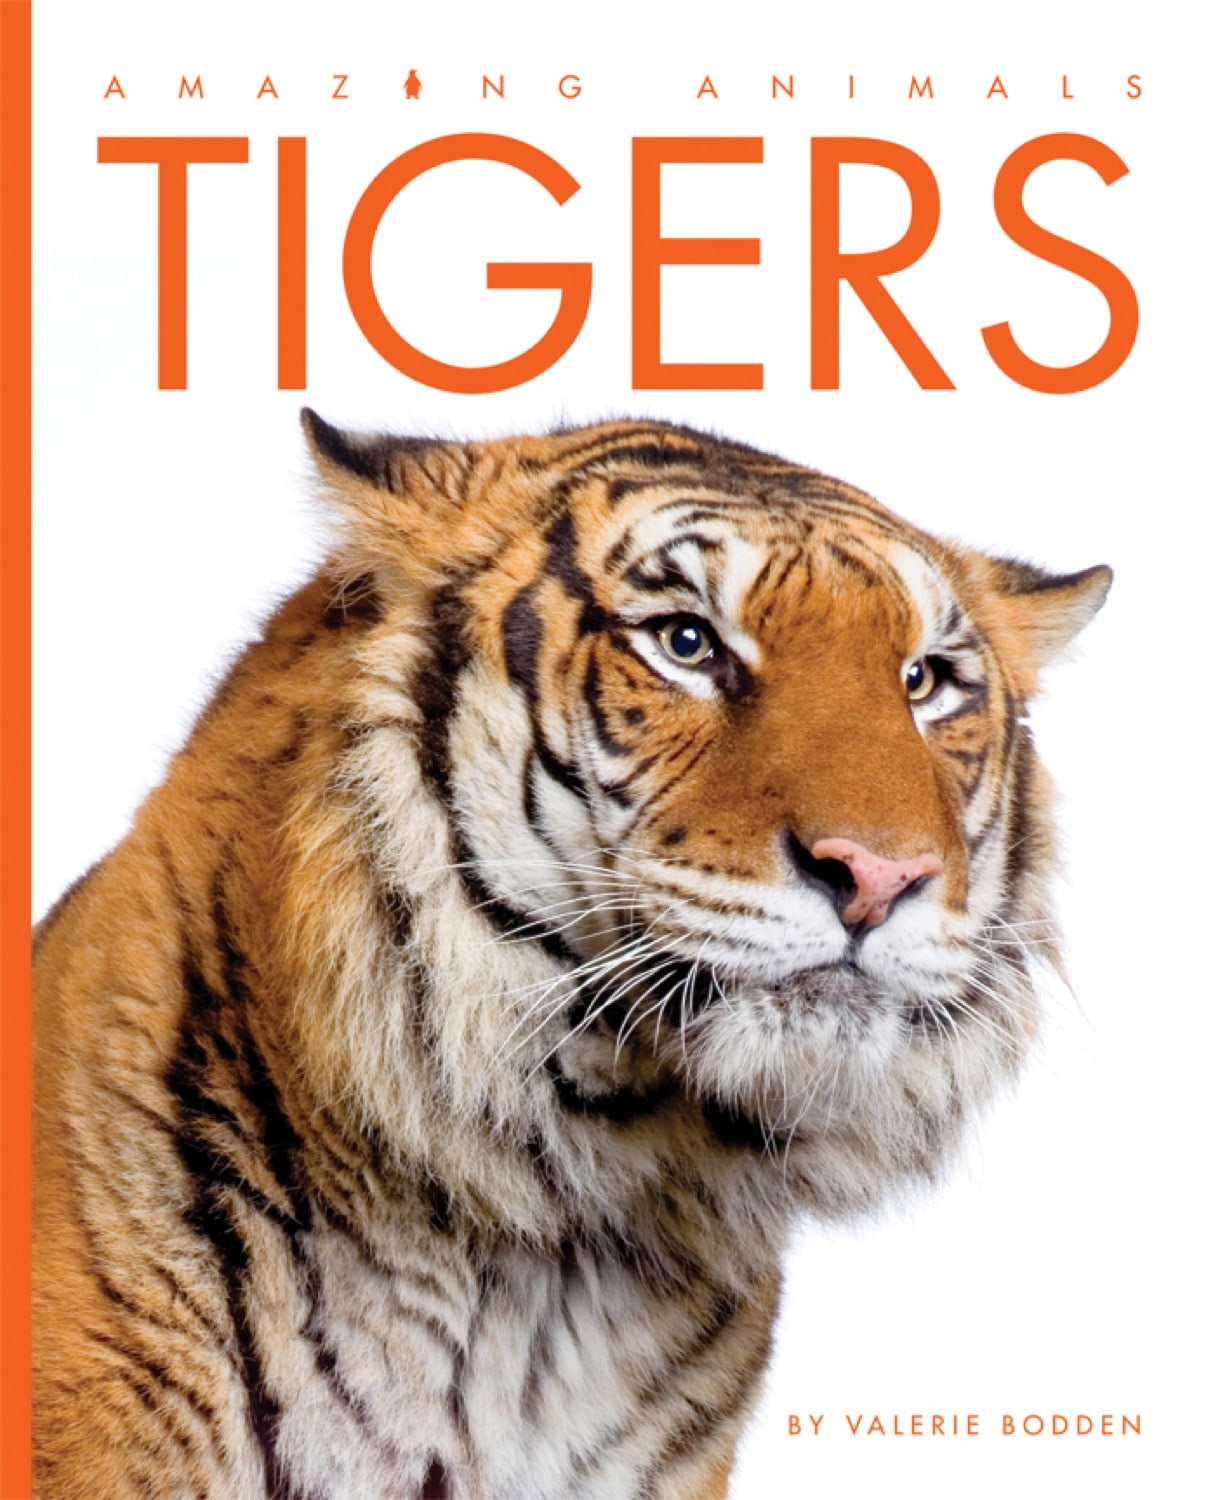 Amazing Animals (2014): Tigers